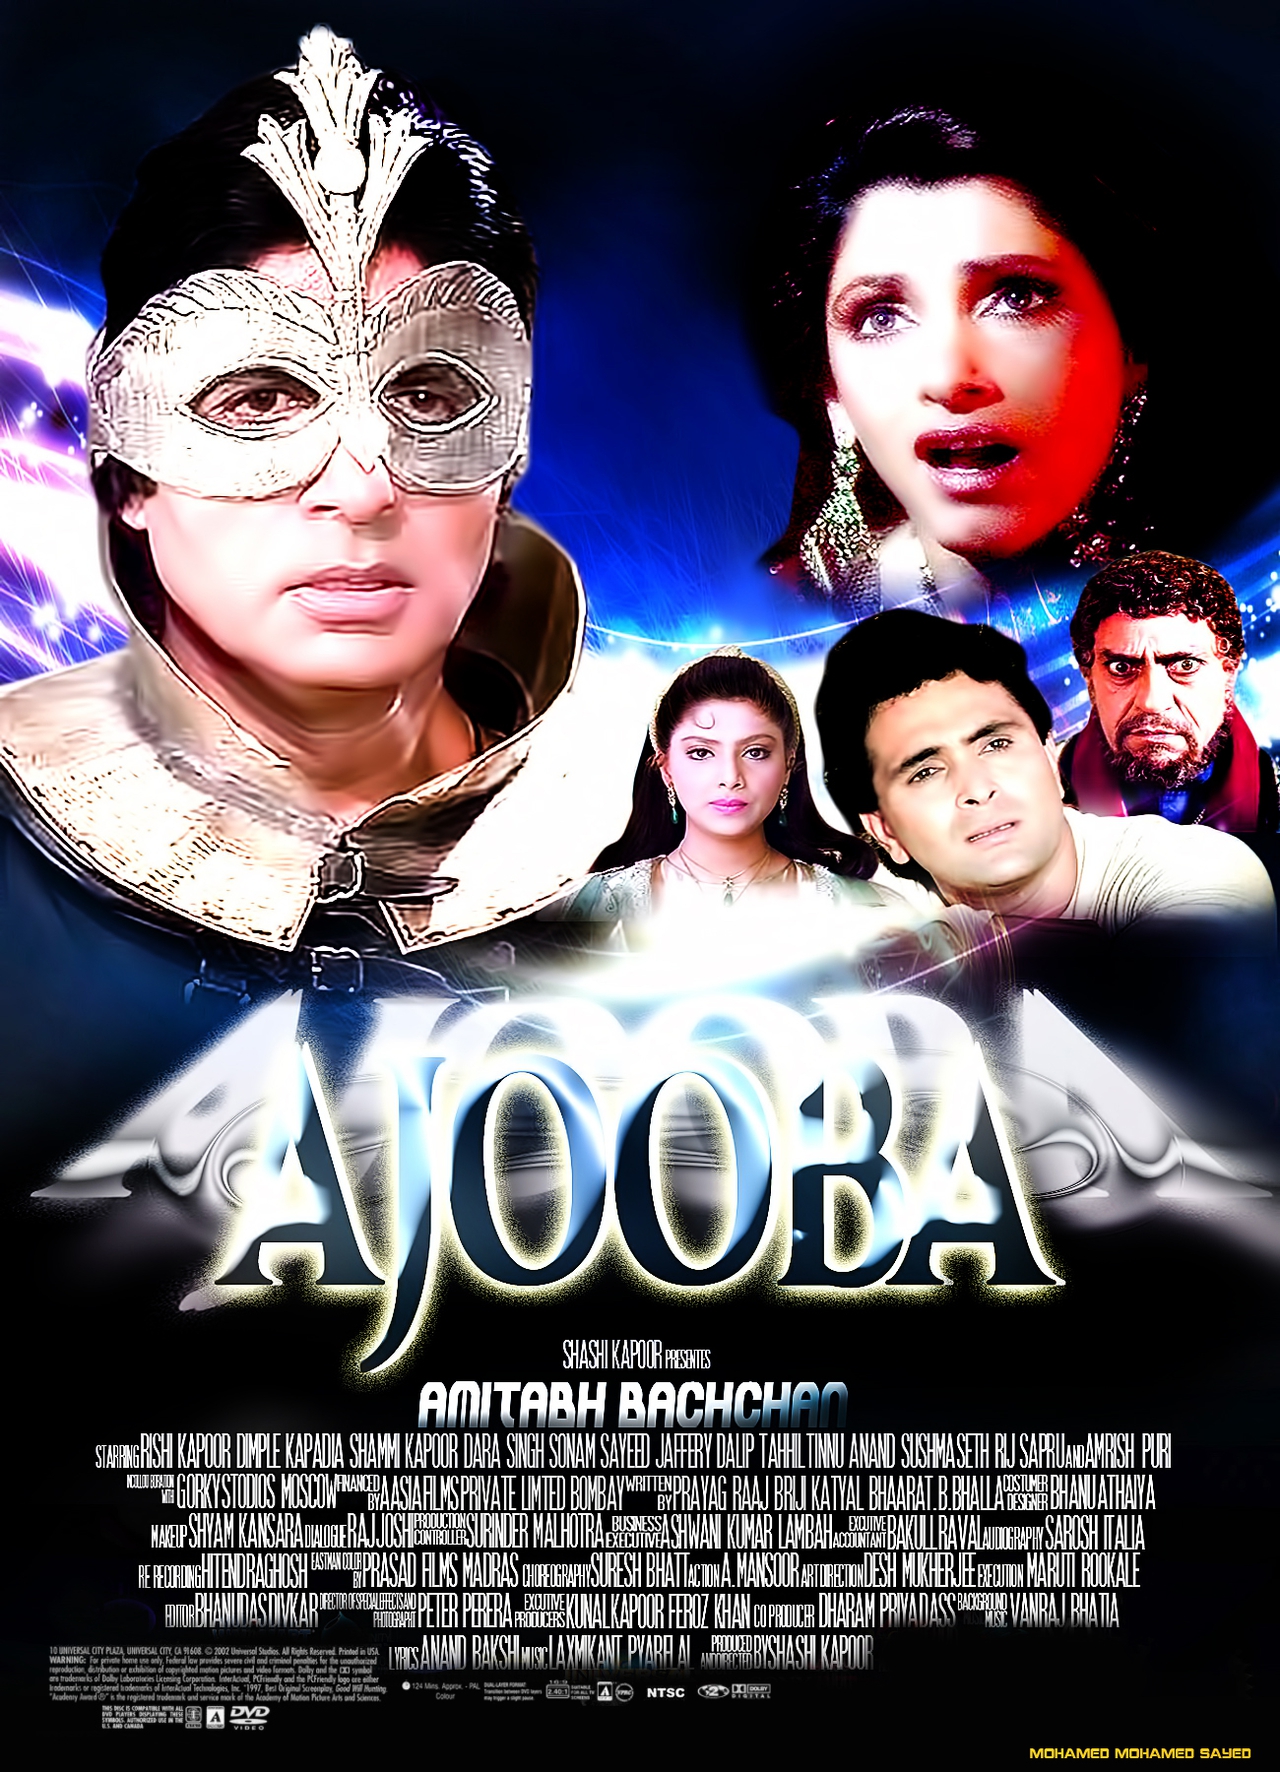 Rishi Kapoor در صحنه فیلم سینمایی Ajooba به همراه Sonam، دیمپل کاپادیا، آمیتاب باچان و آمریش پاری